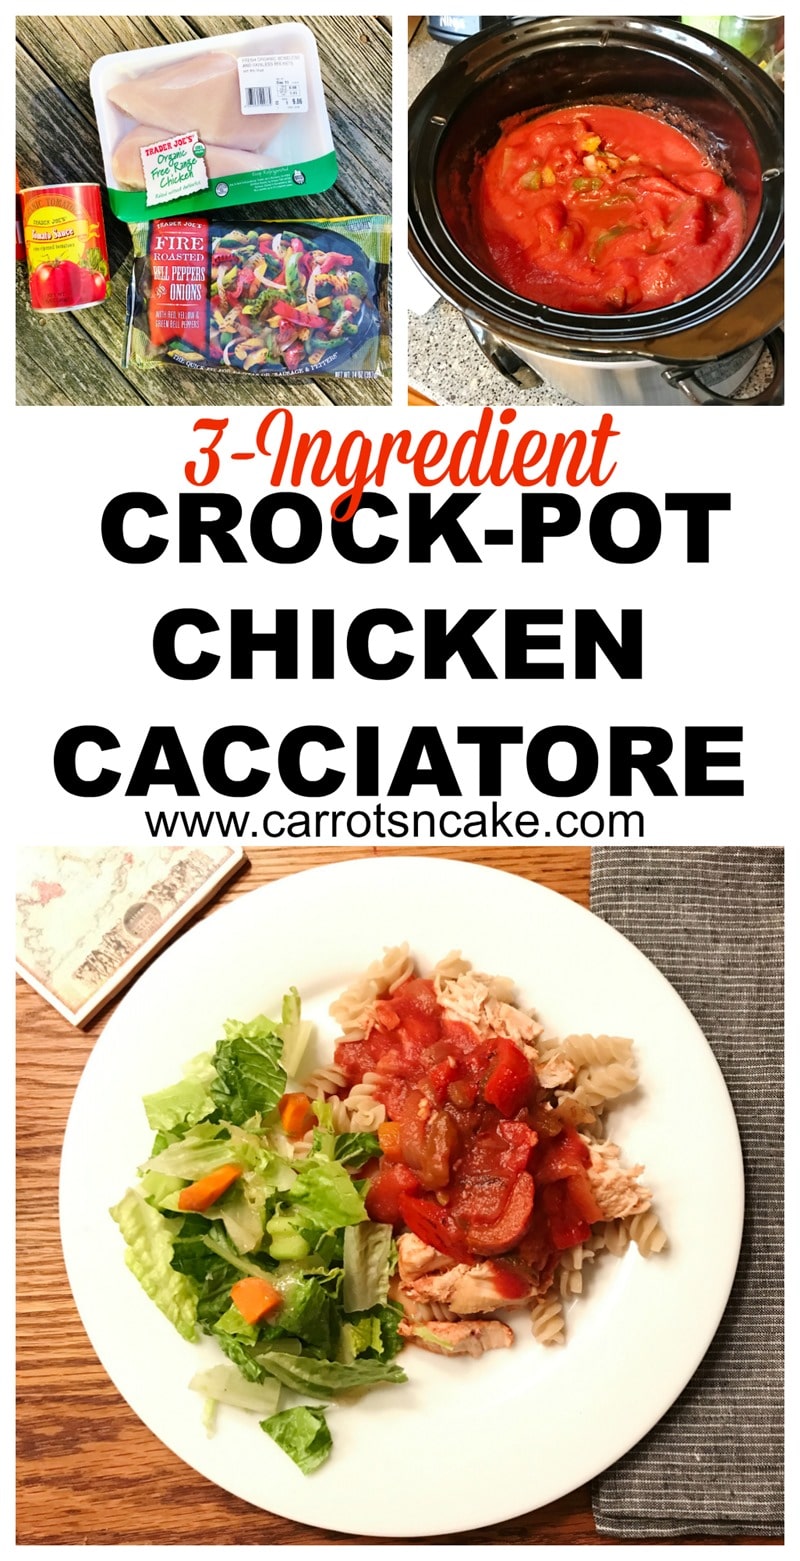 Crock-pot Chicken Cacciatore